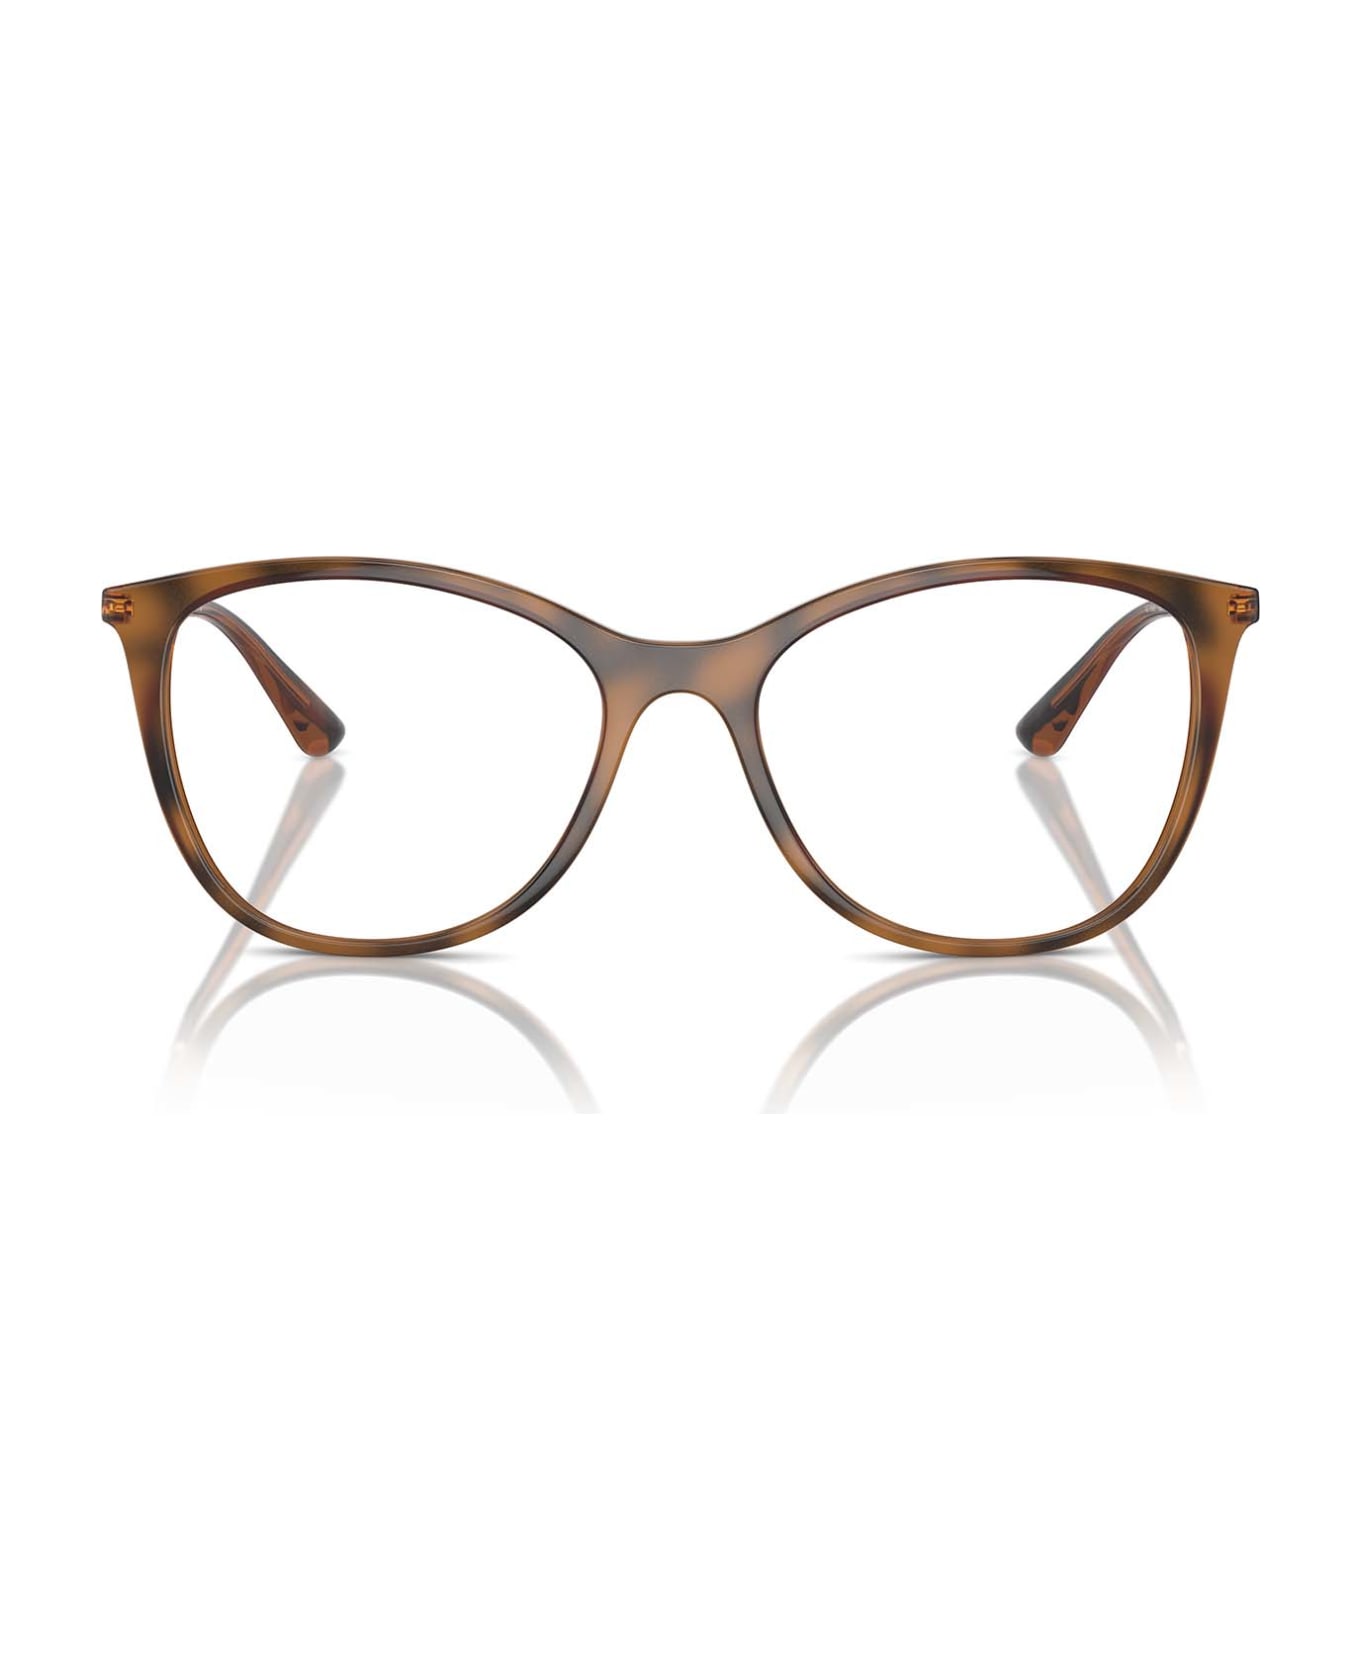 Vogue Eyewear Vo5562 Top Dark Havana / Light Brown Glasses - Top Dark Havana / Light Brown